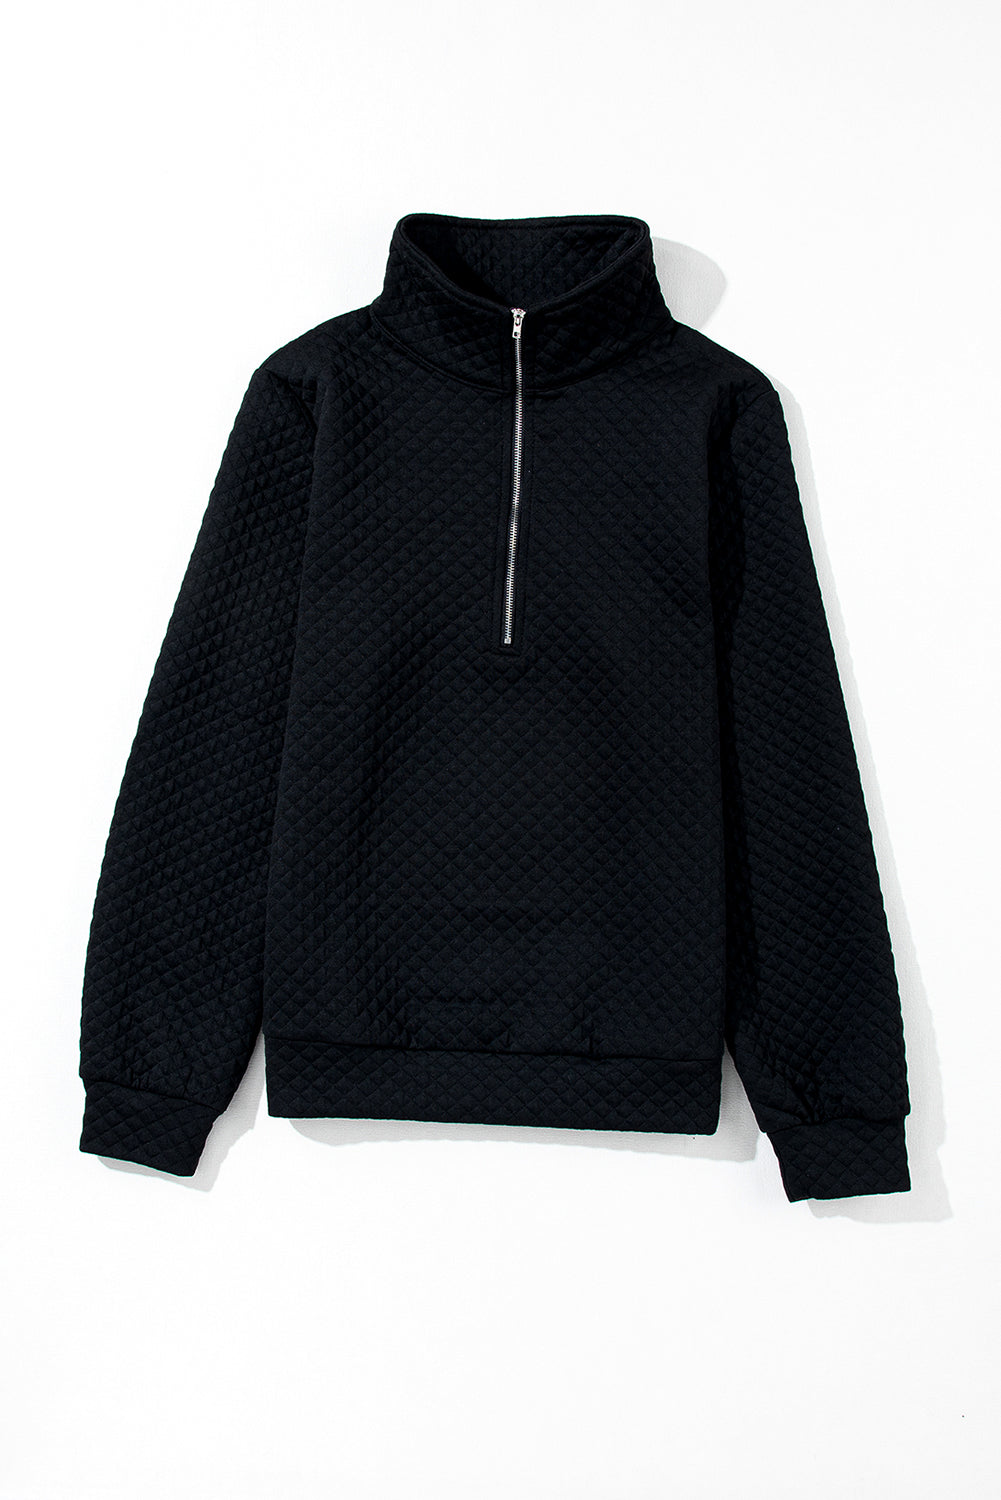 Black Solid Half Zipper Quilted Pullover Sweatshirt - SELFTRITSS